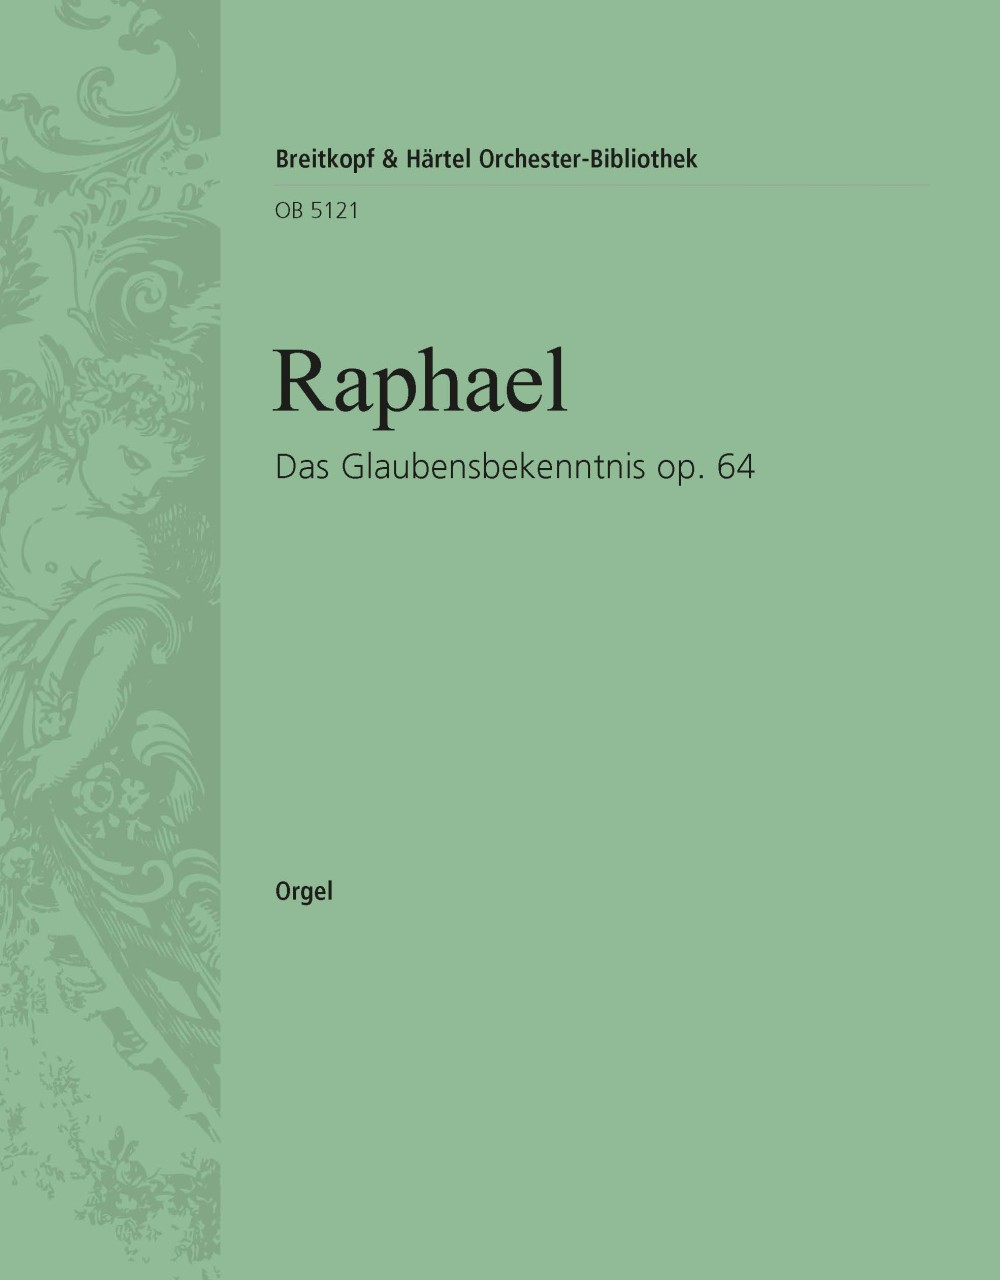 Das Glaubensbekenntnis Op. 64 (RAPHAEL GUNTER)